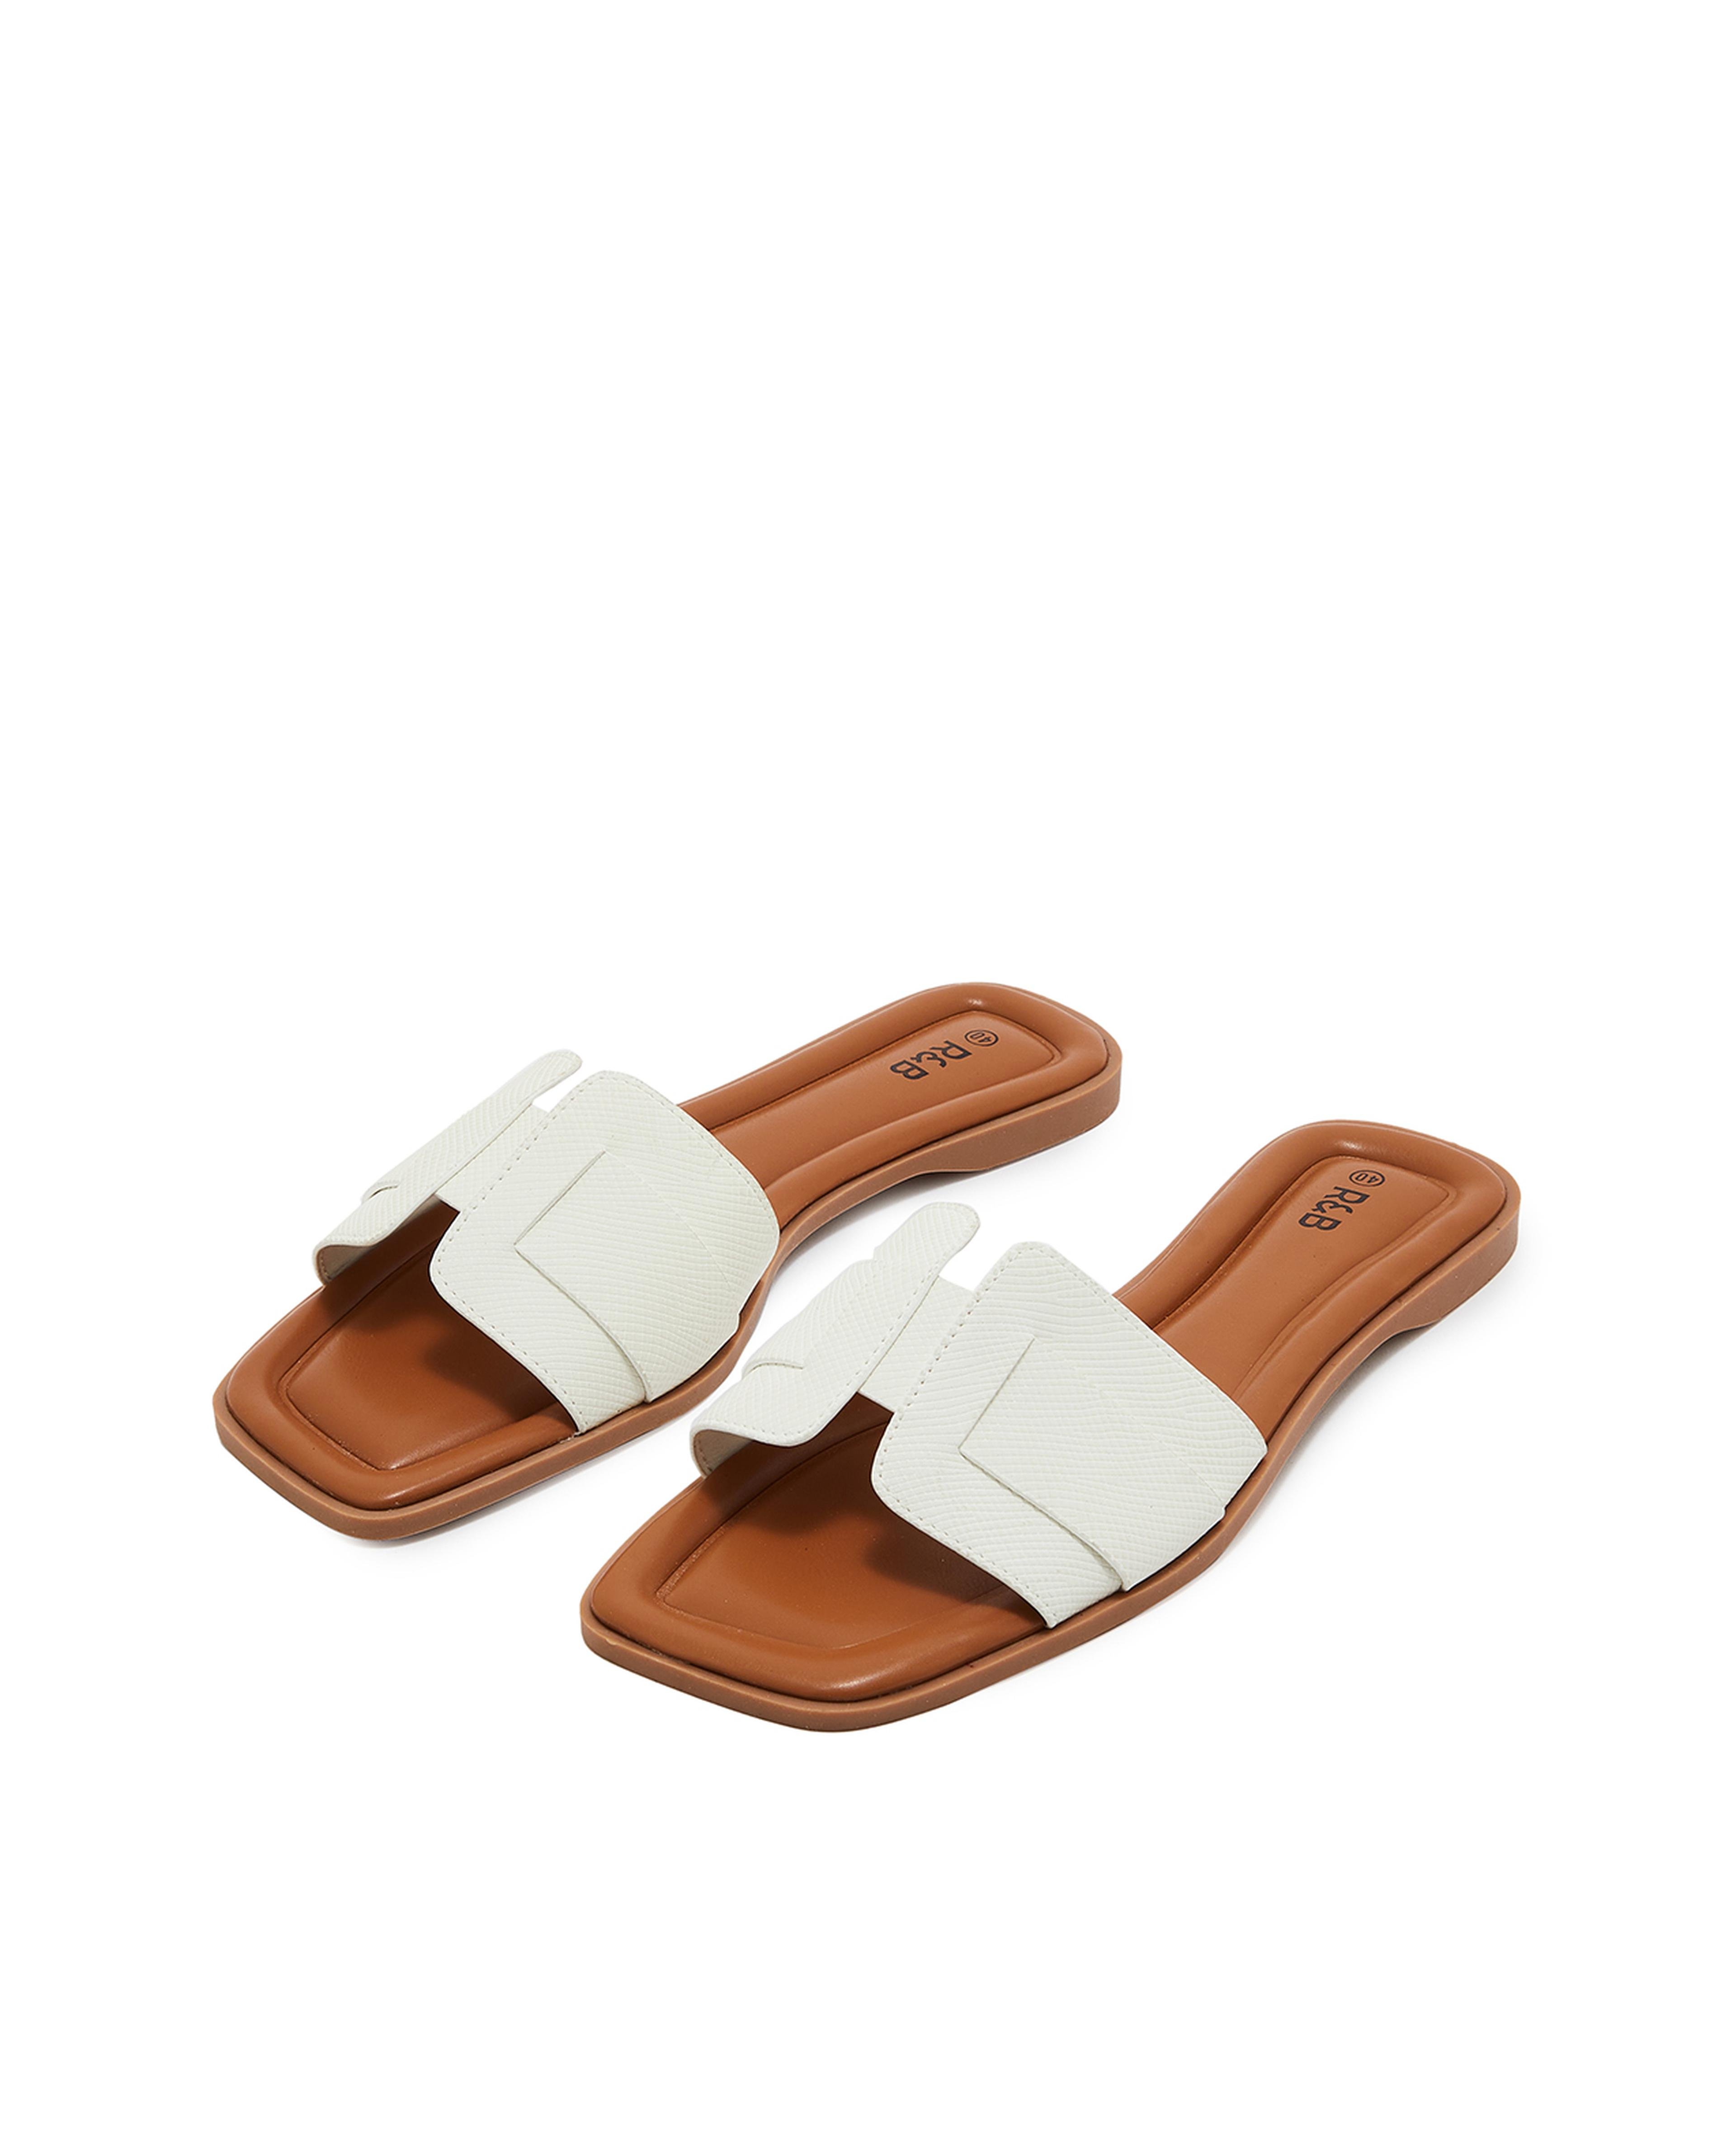 Open Toe Flat Sandals